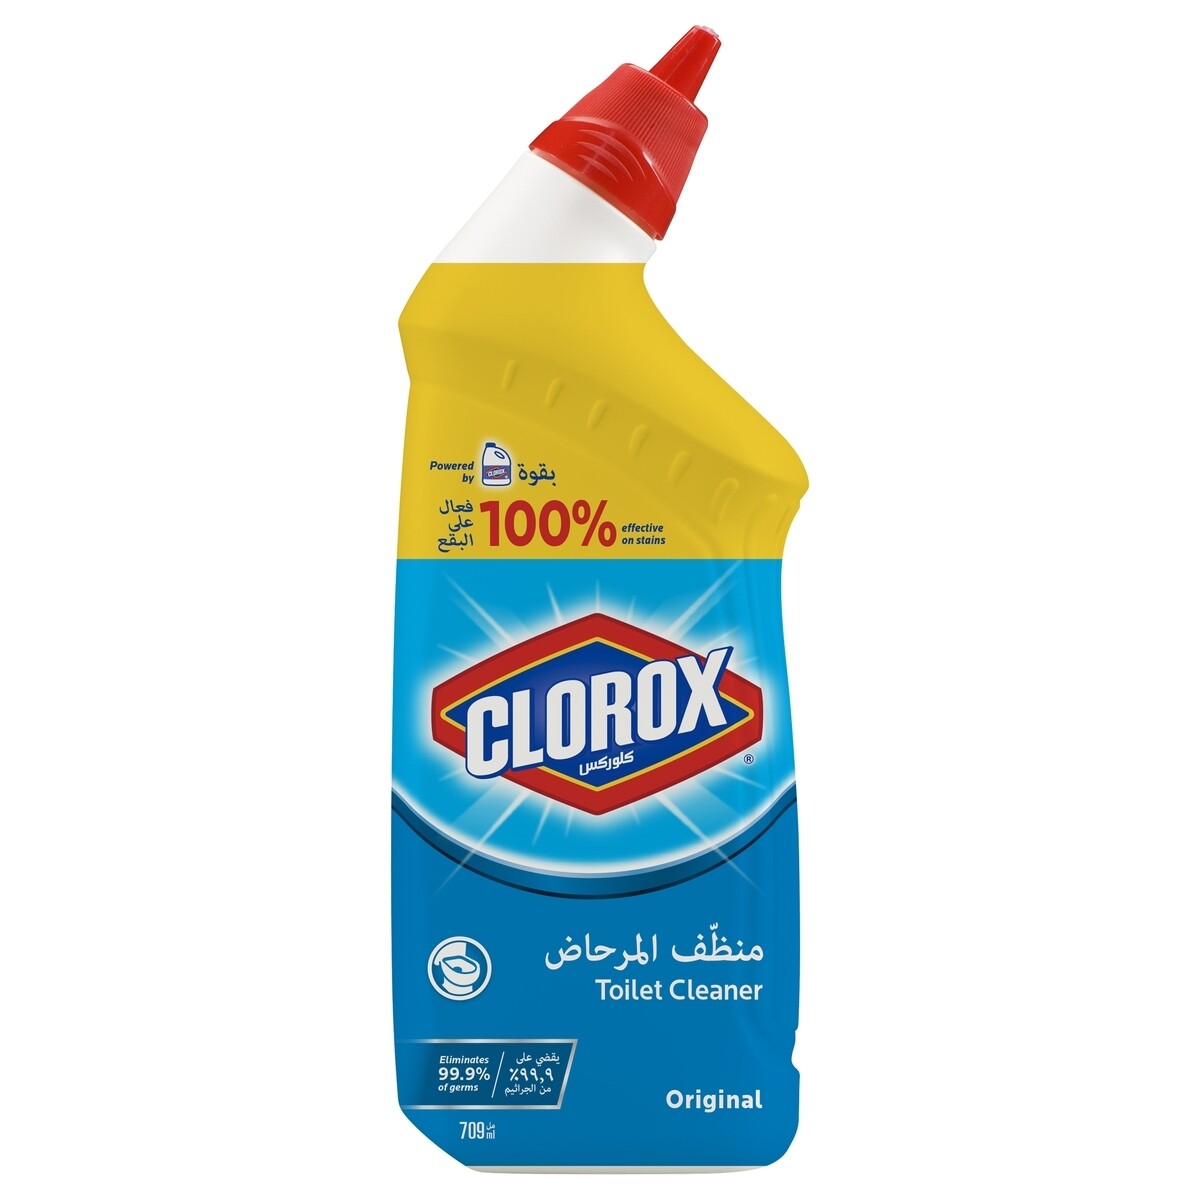 Clorox Toilet Cleaner 709ml Original